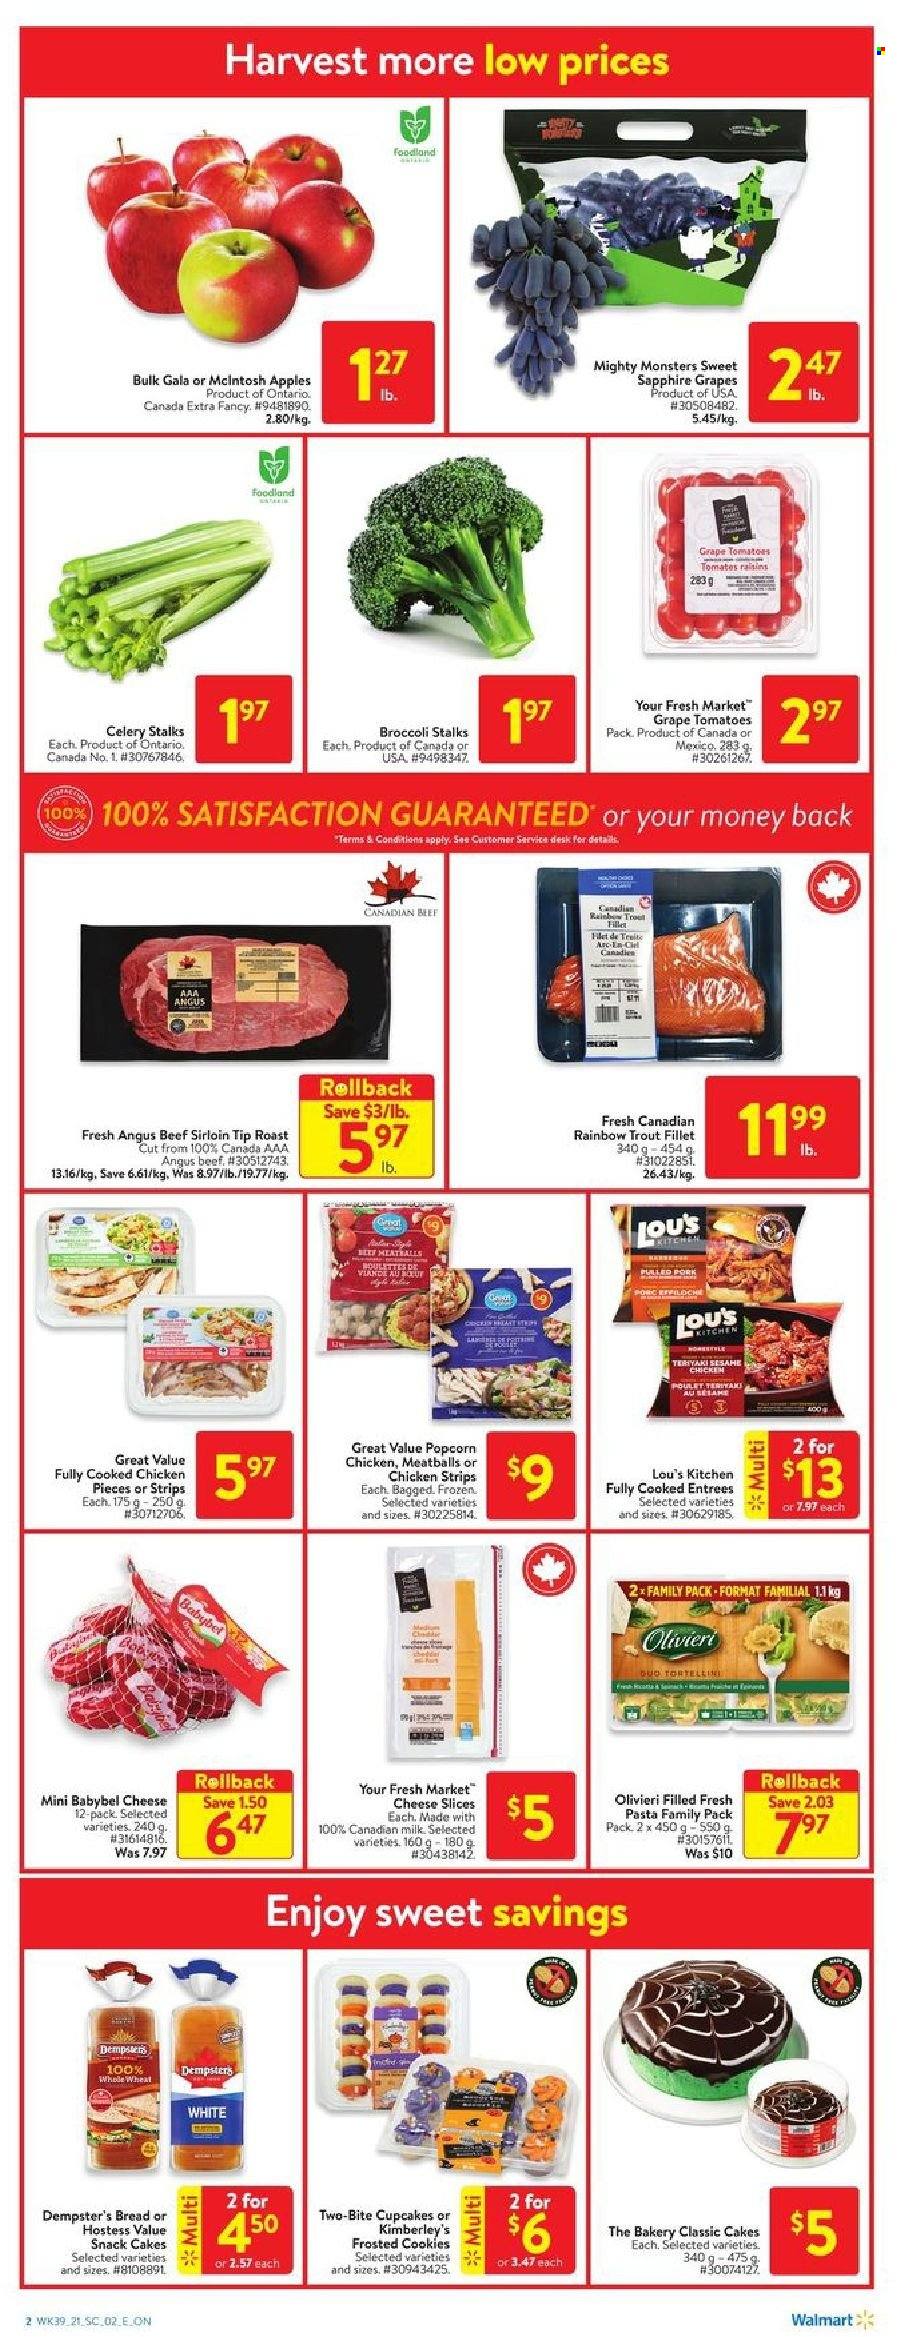 thumbnail - Circulaire Walmart - 21 Octobre 2021 - 27 Octobre 2021 - Produits soldés - tomates, poulet, fromage, cookies, popcorn, Babybel. Page 2.